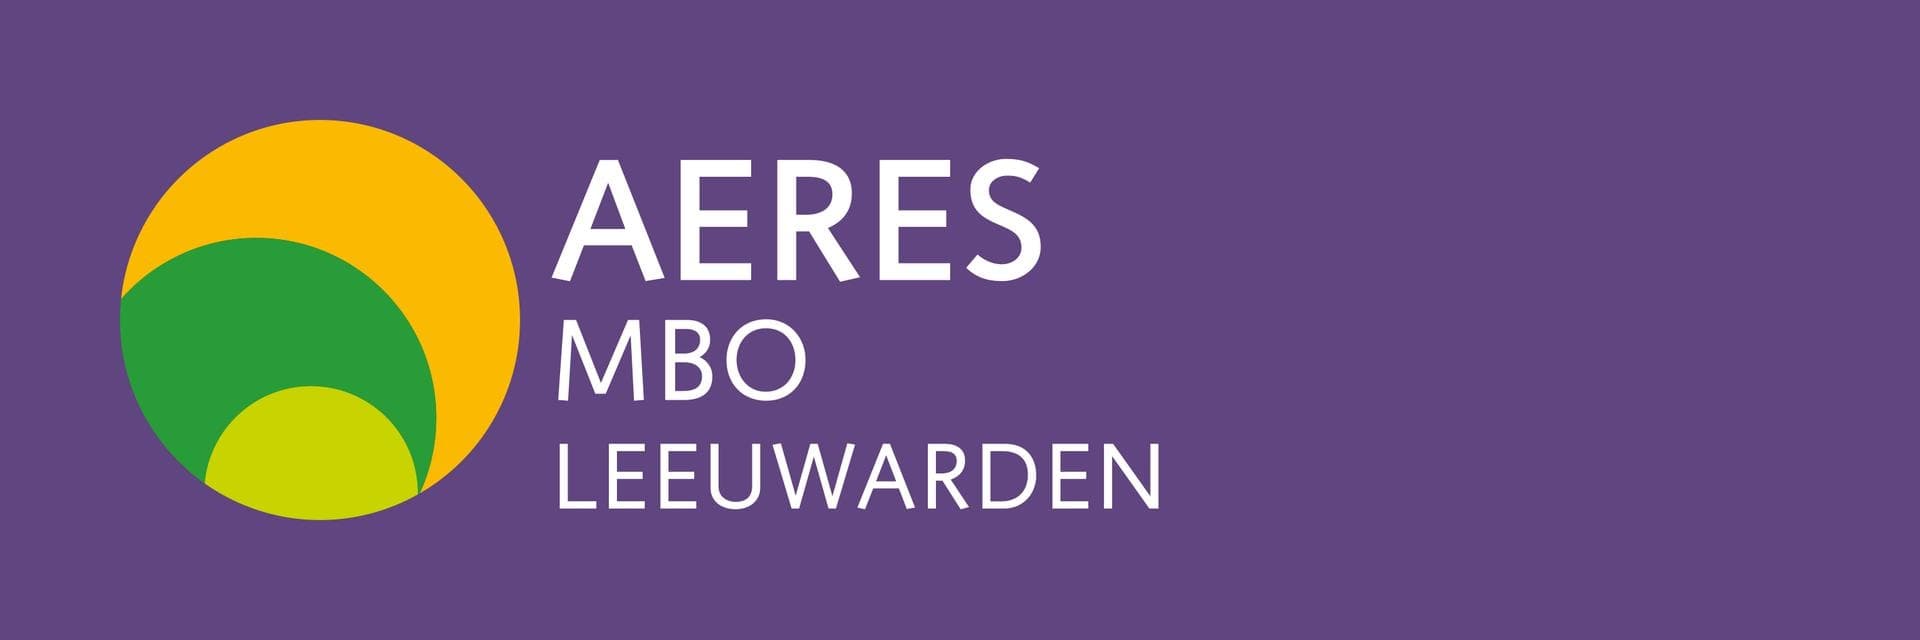 Aeres MBO Leeuwarden